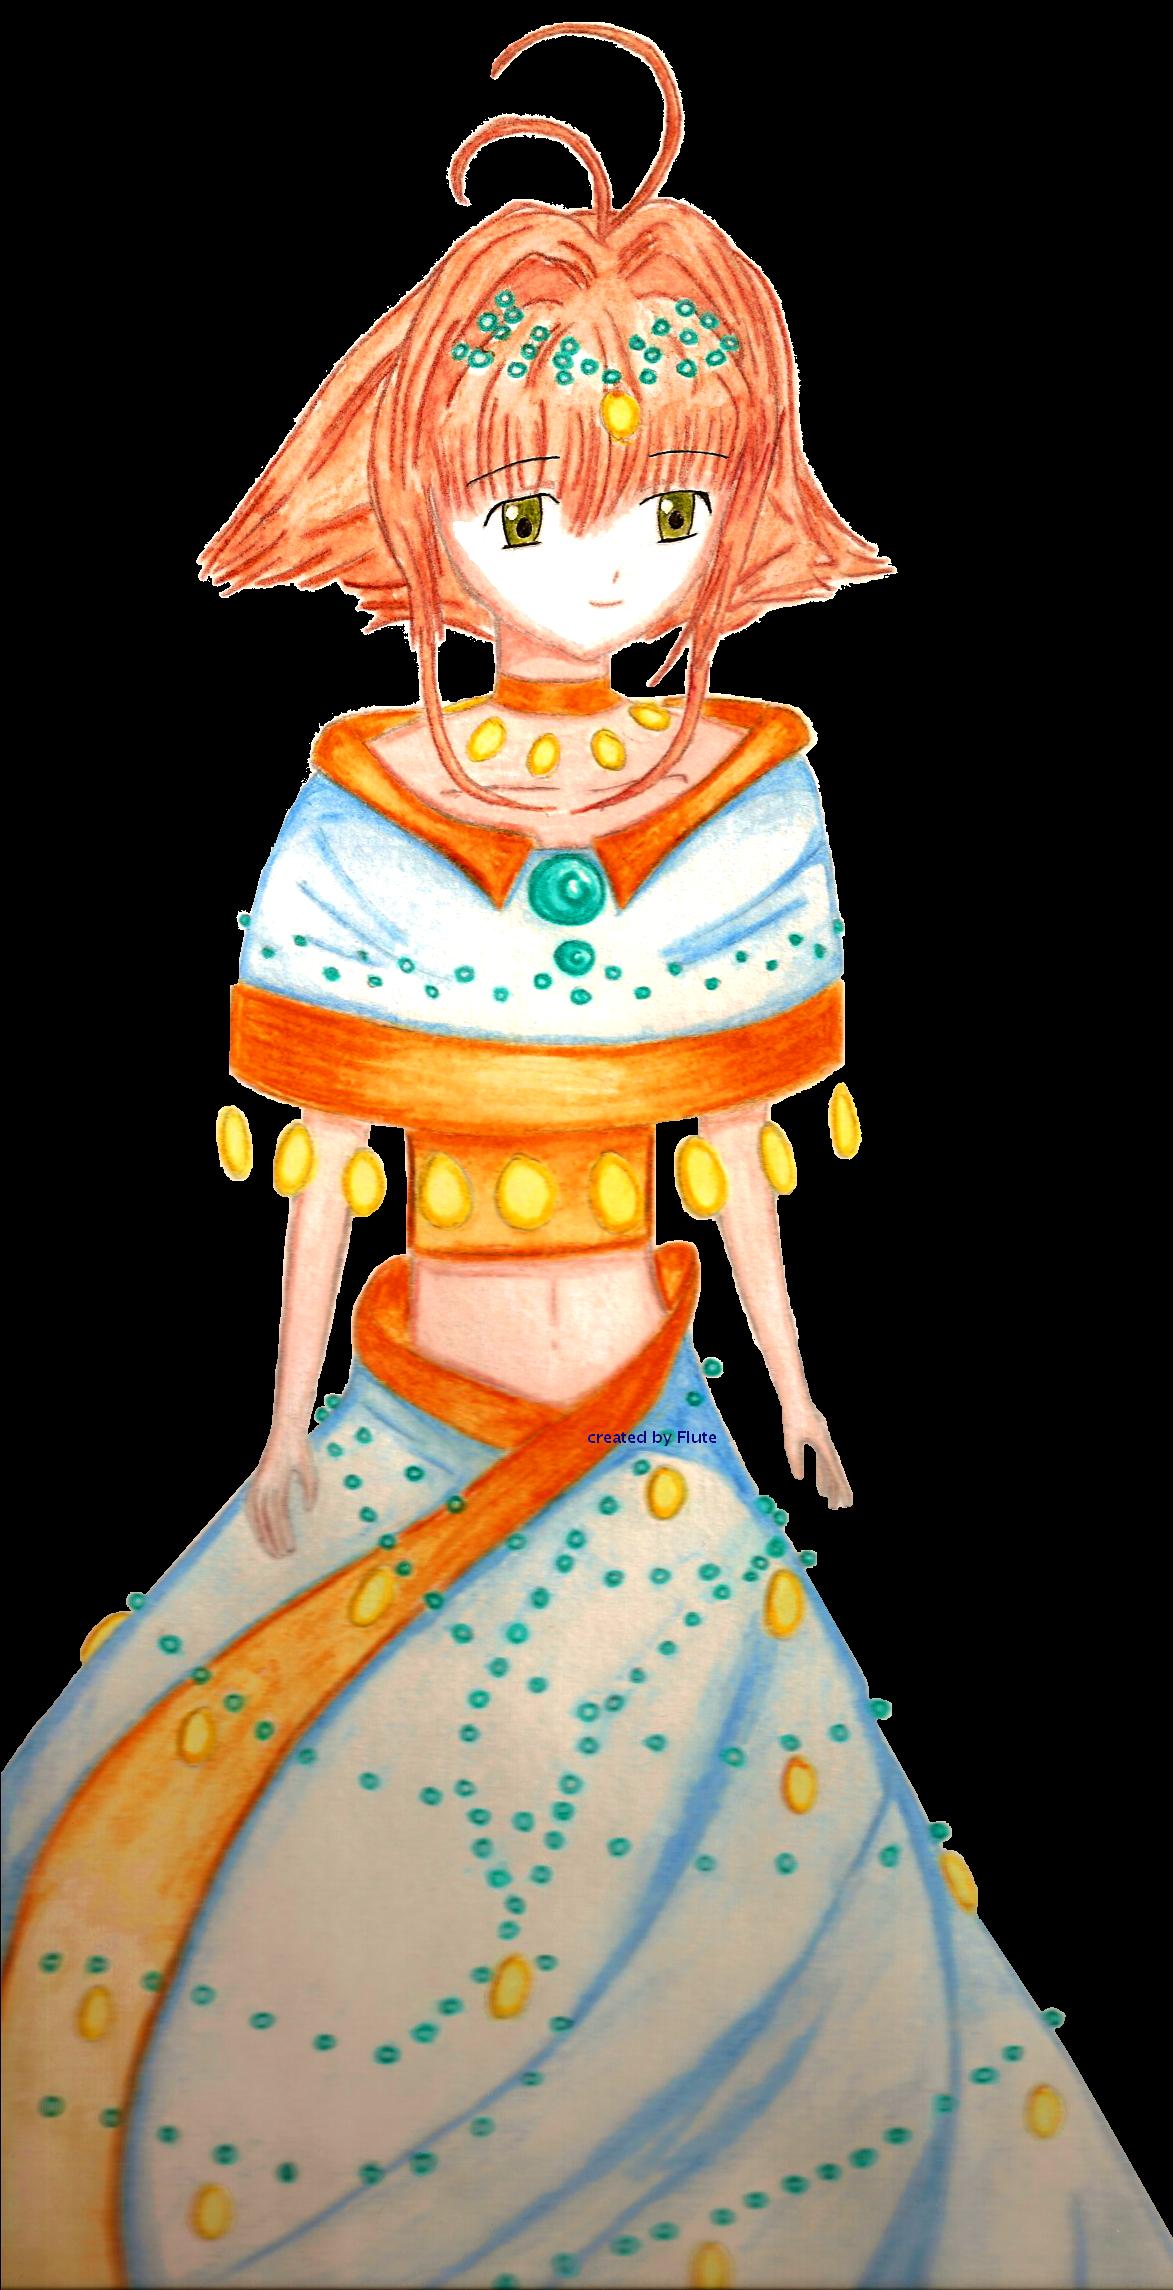 Tsubasa - Princess Sakura by Flute